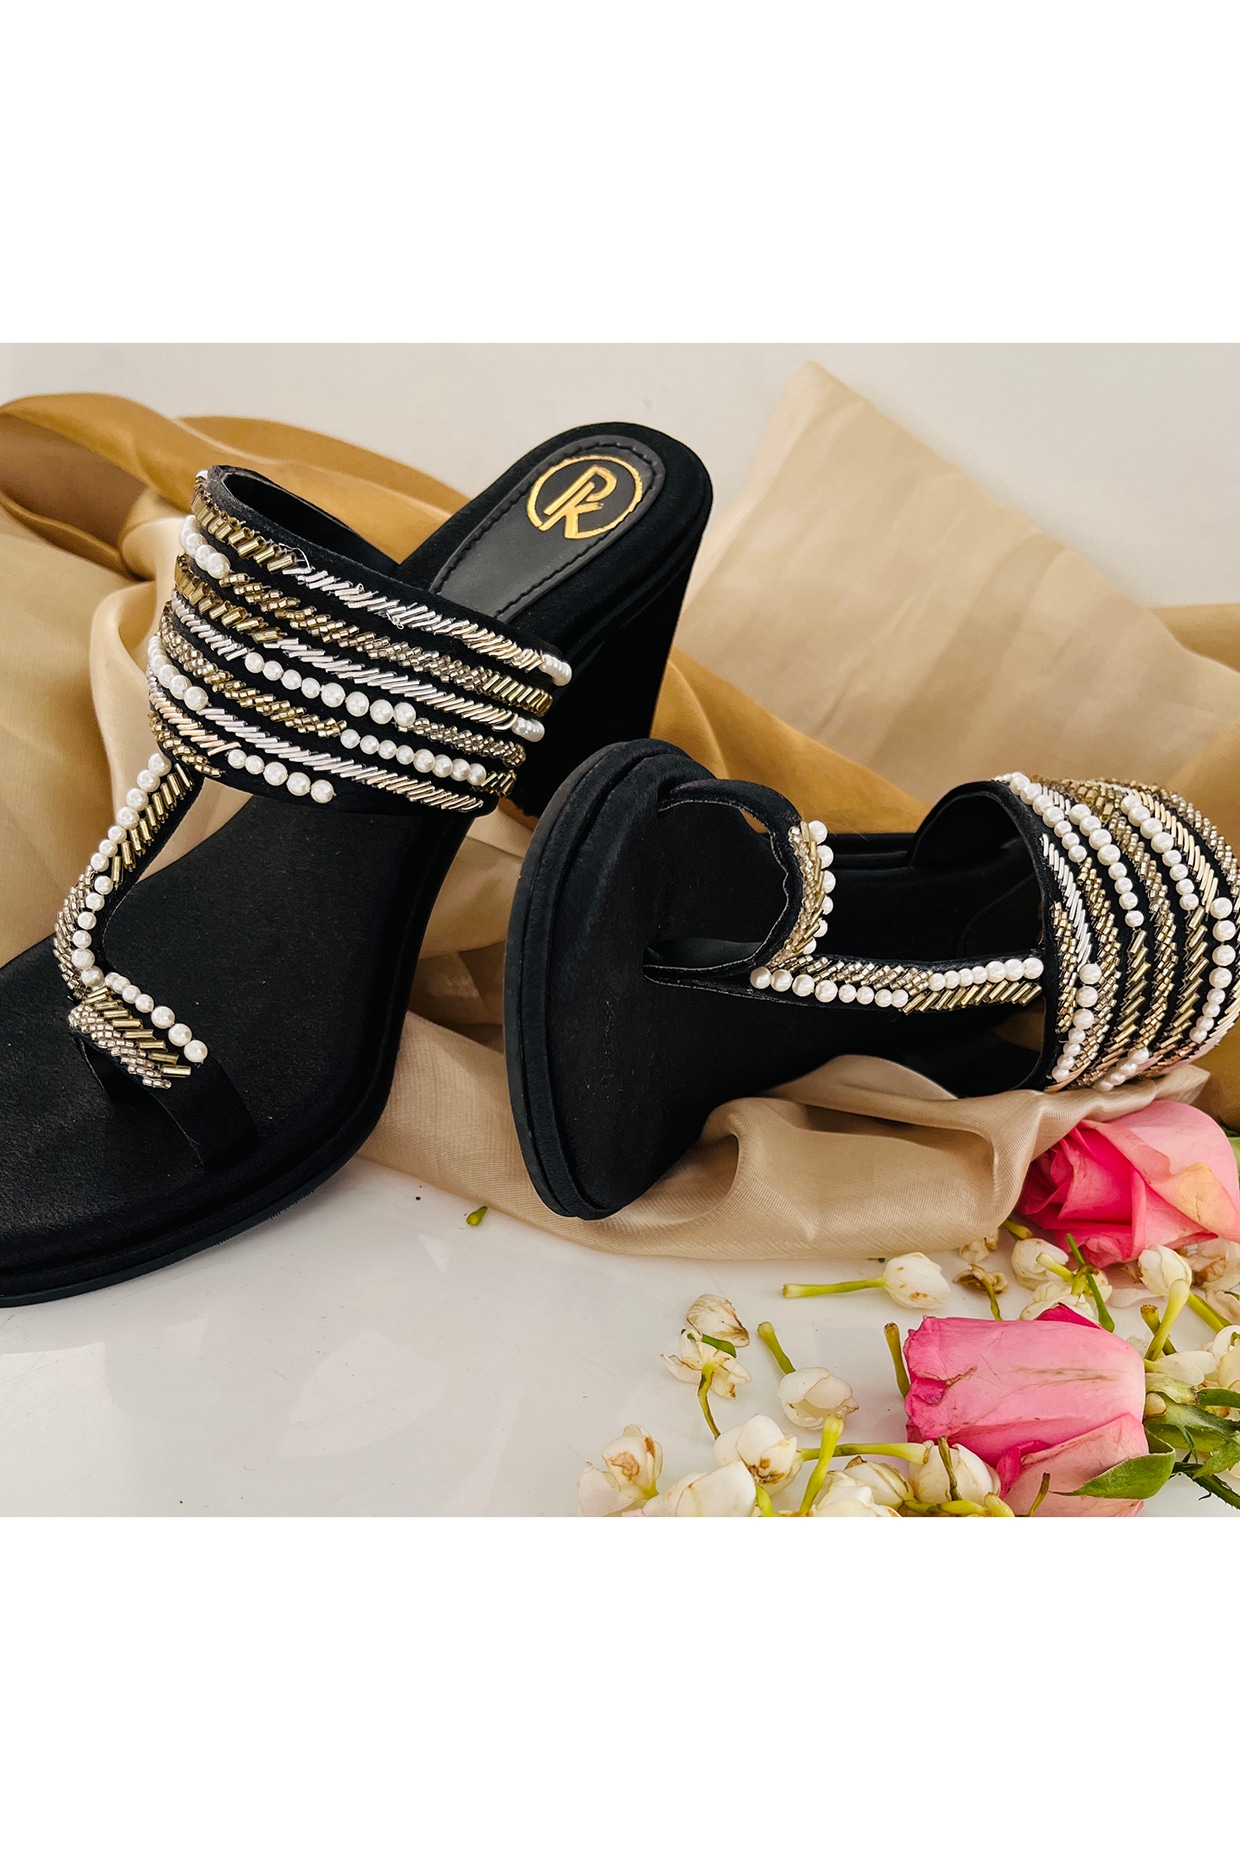 Silver Heels Best Price In Pakistan | Rs 3600 | find the best quality of  Footwear, Slippers, Shoes, Sandals, Heels, High-heels, Khoosa, Sneakers,  Kolhapuri Chappal, Kitten Heel, Jutti, Boots at Wishlistpk.com